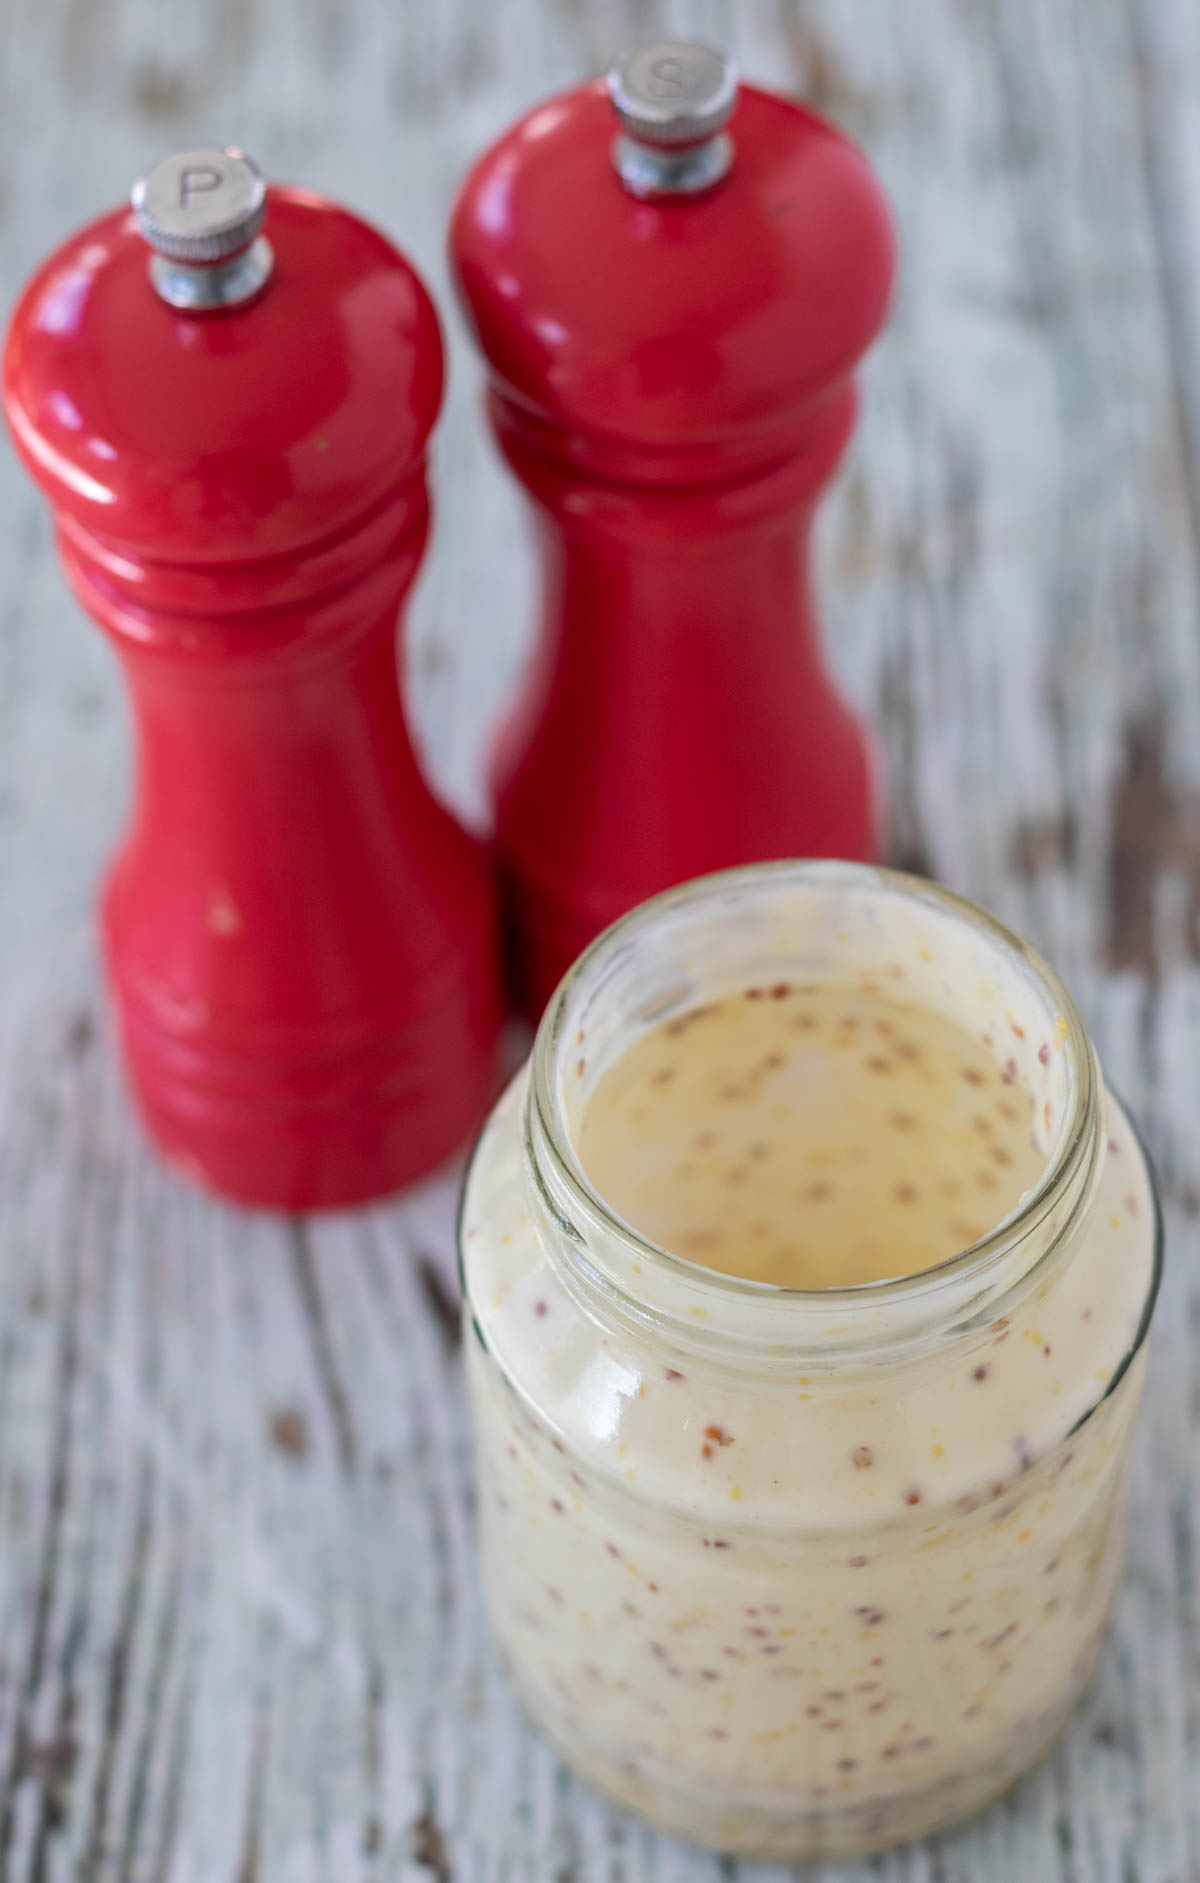 Honey mustard dressing made in a jar. Salt and pepper cellars behind.